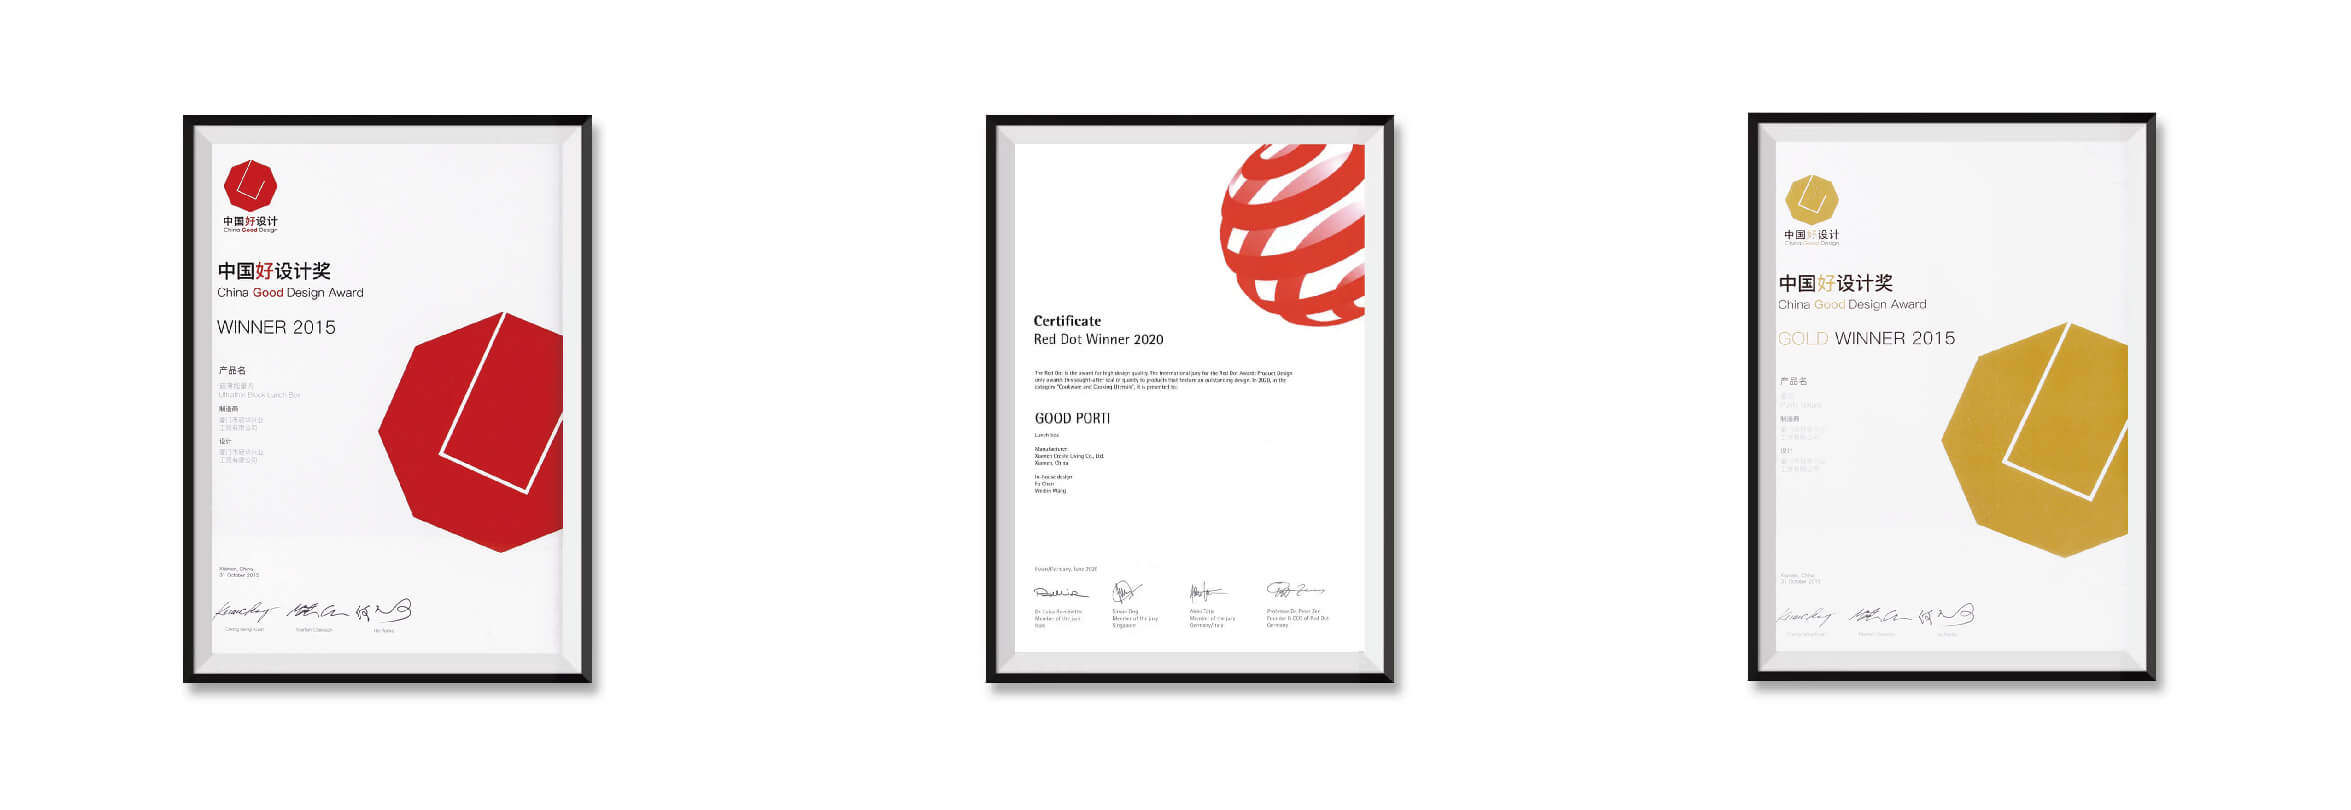 Red-Dot-Design-Certificate